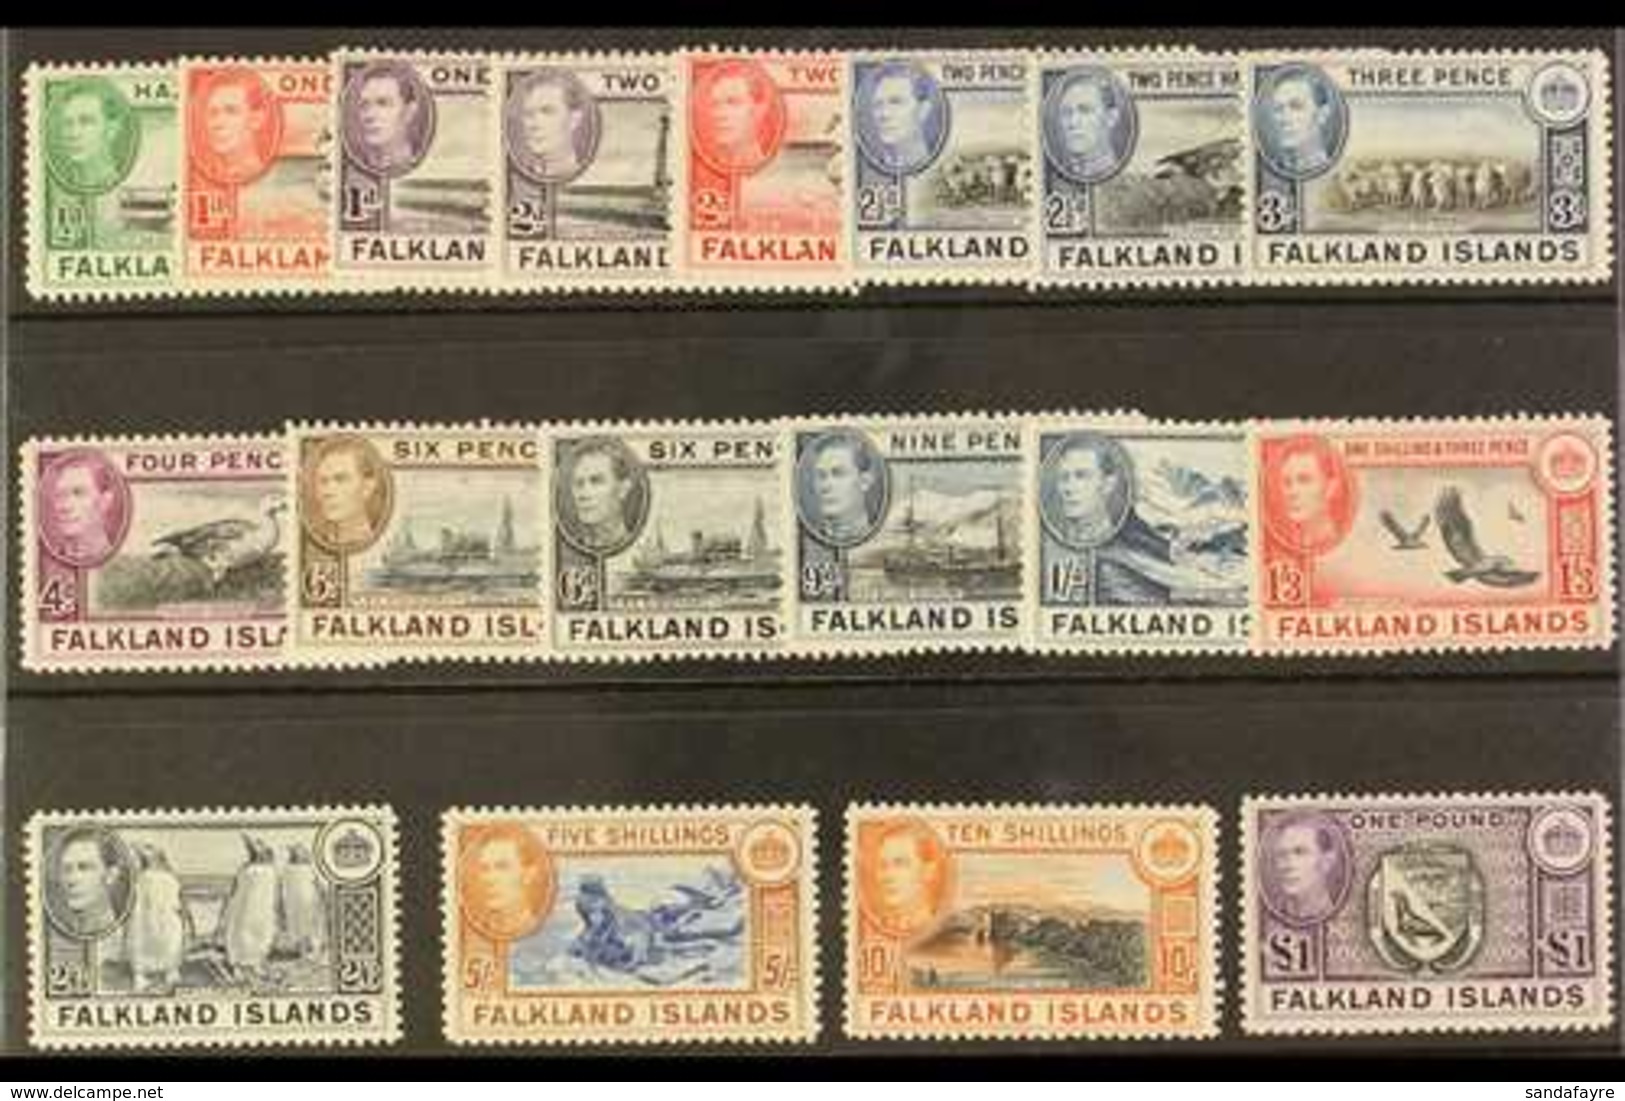 1938-50 KGVI Pictorial Definitives Complete Set, SG 146/63, Very Fine Mint. (18 Stamps) For More Images, Please Visit Ht - Falkland Islands